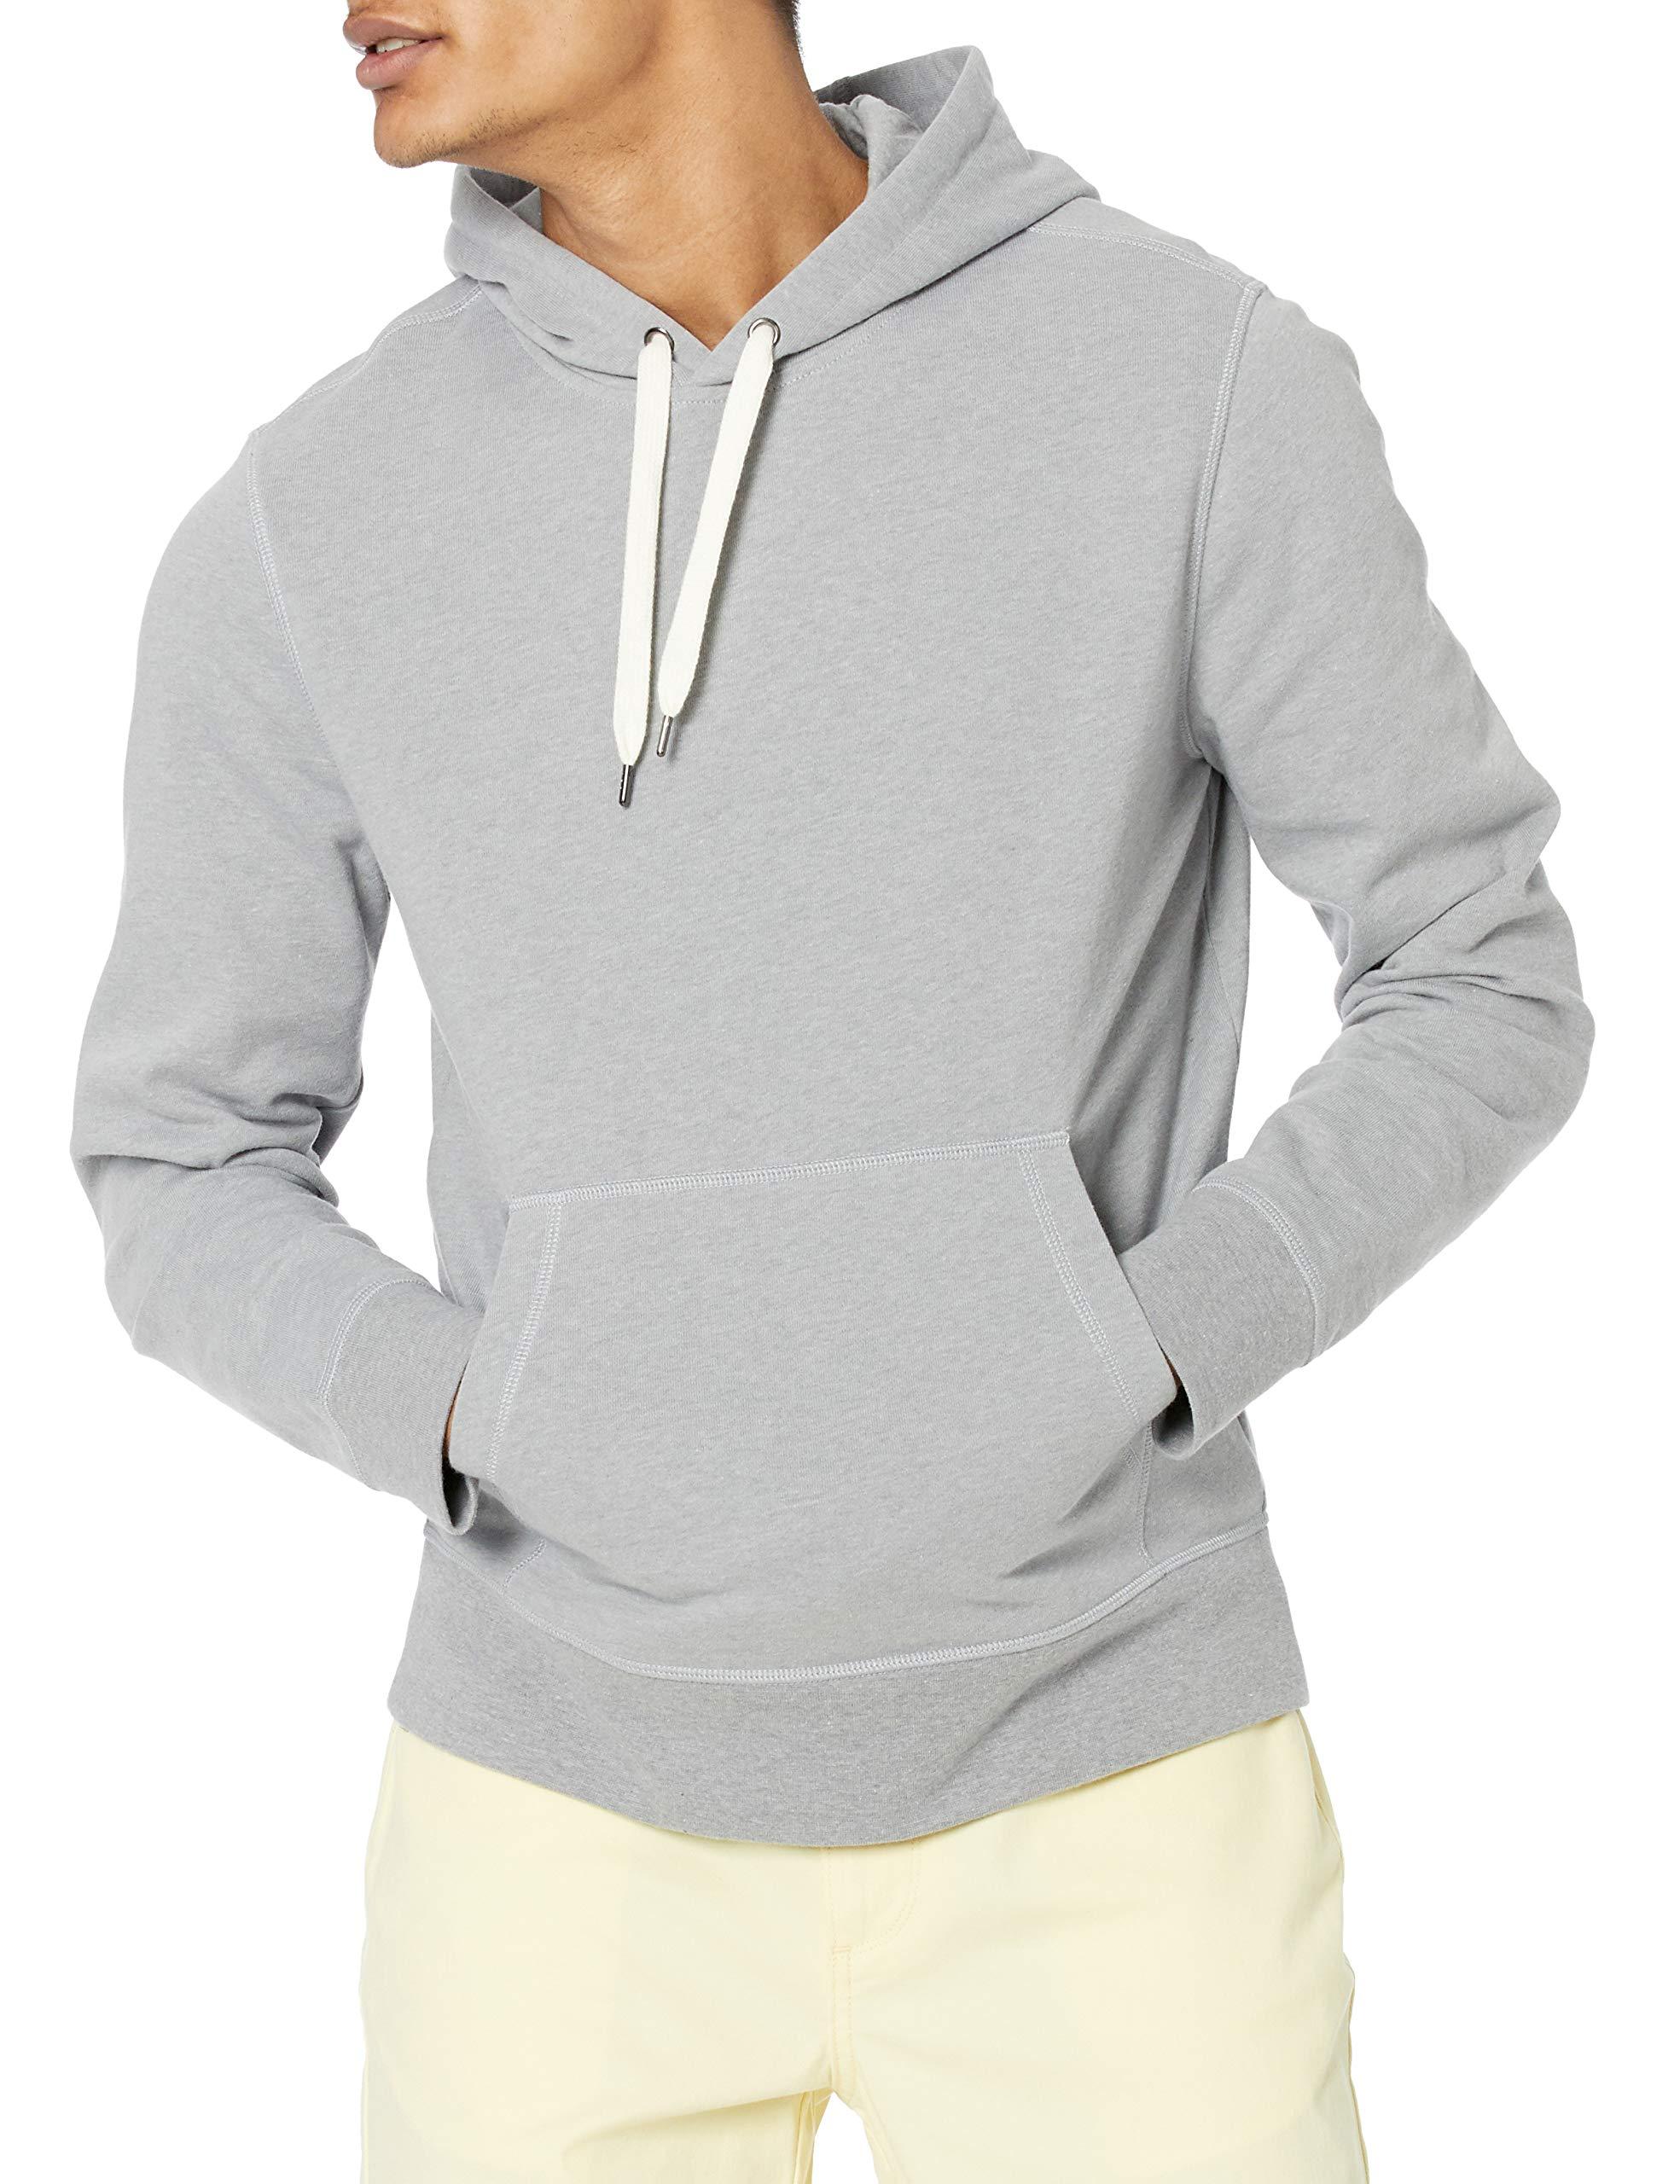 Amazon Essentials Lightweight French Terry Hooded Sweatshirt in Light Grey  Heather (Gray) for Men - Lyst